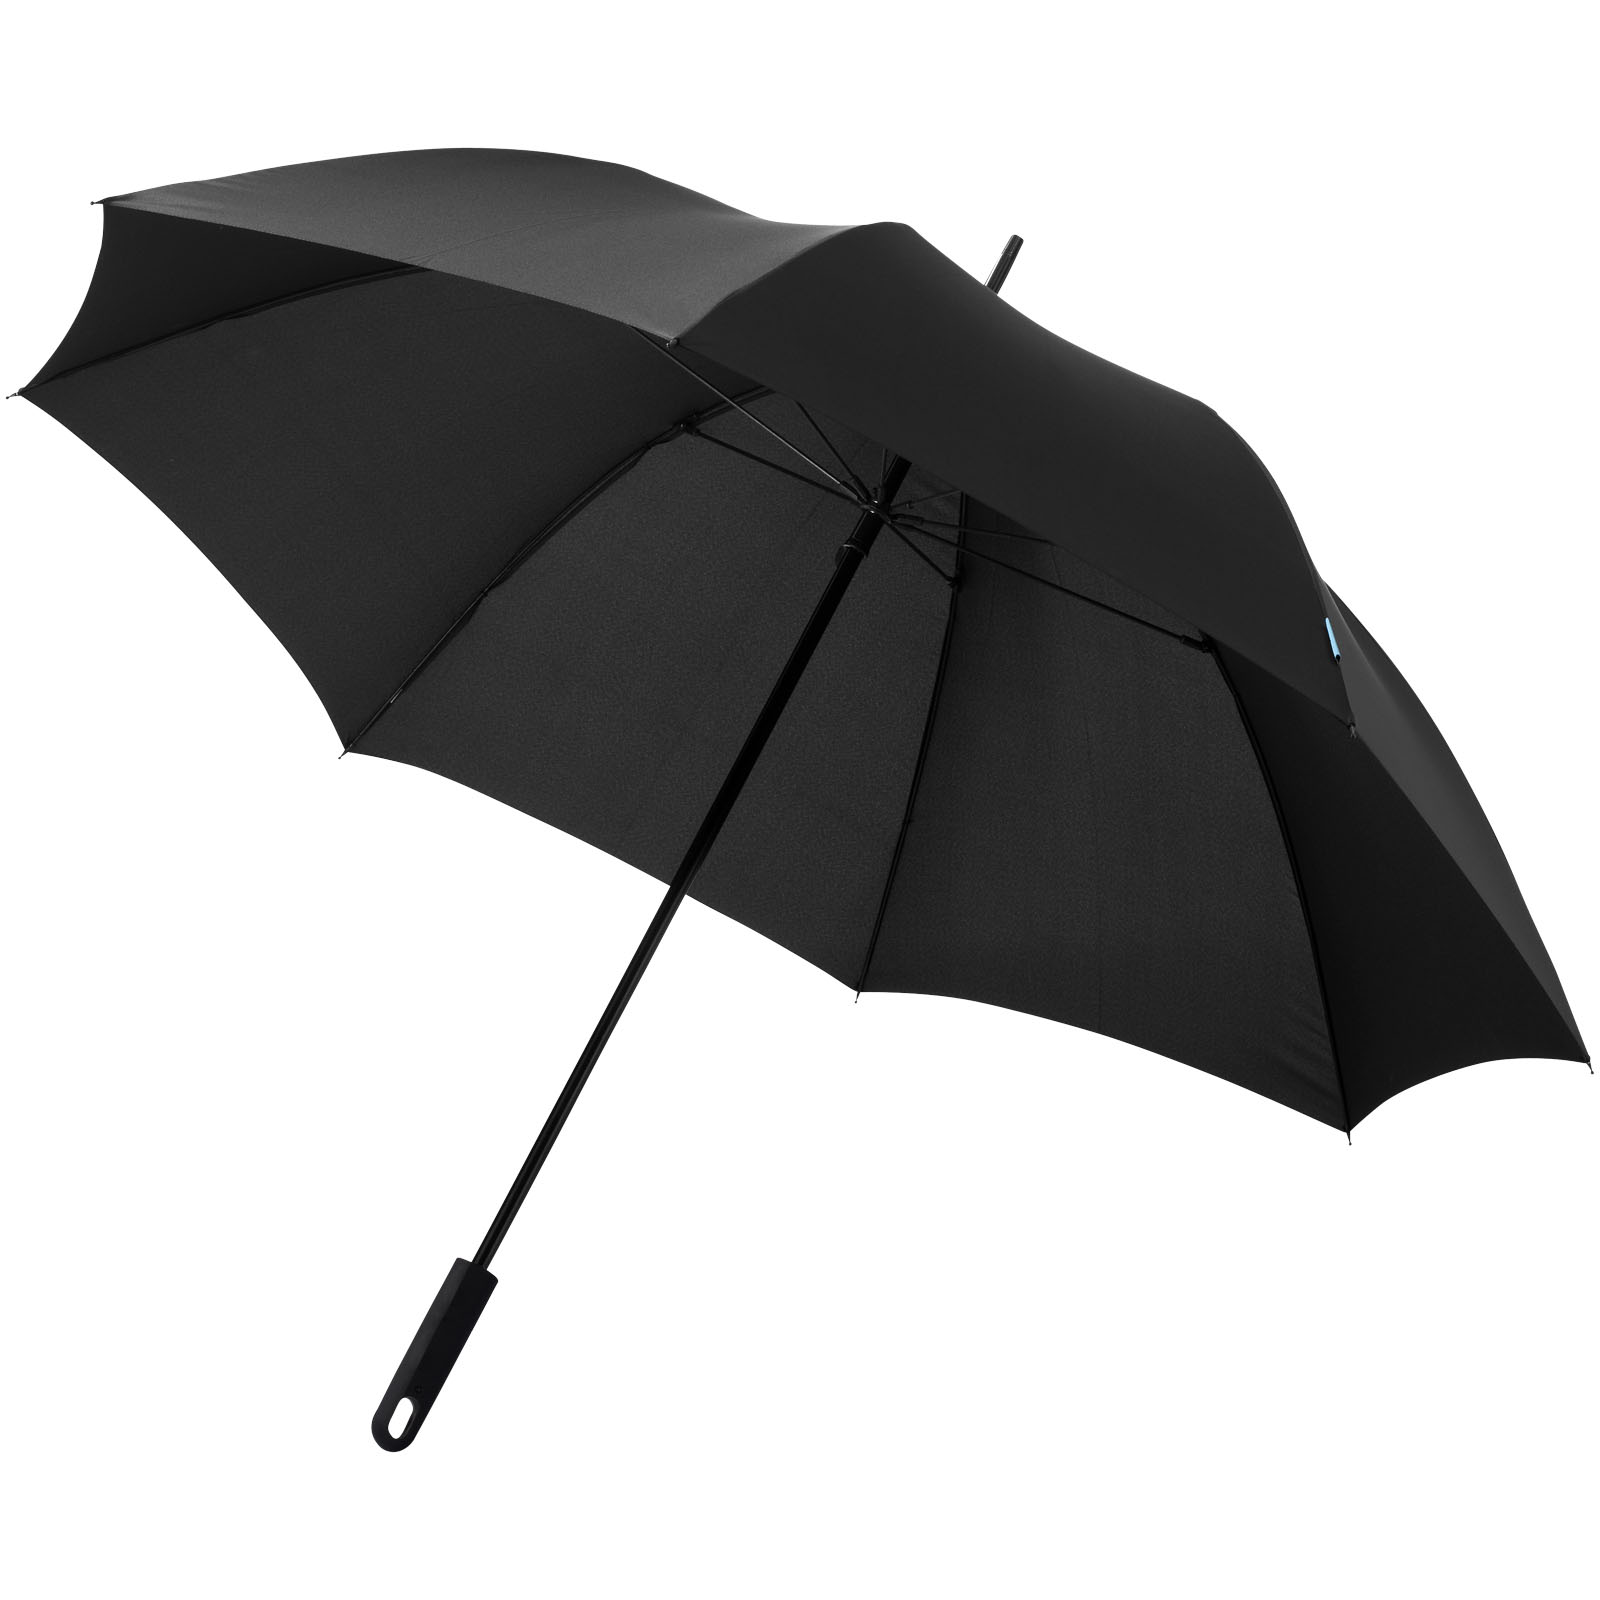 Parapluie au Design Exclusif - Emerainville